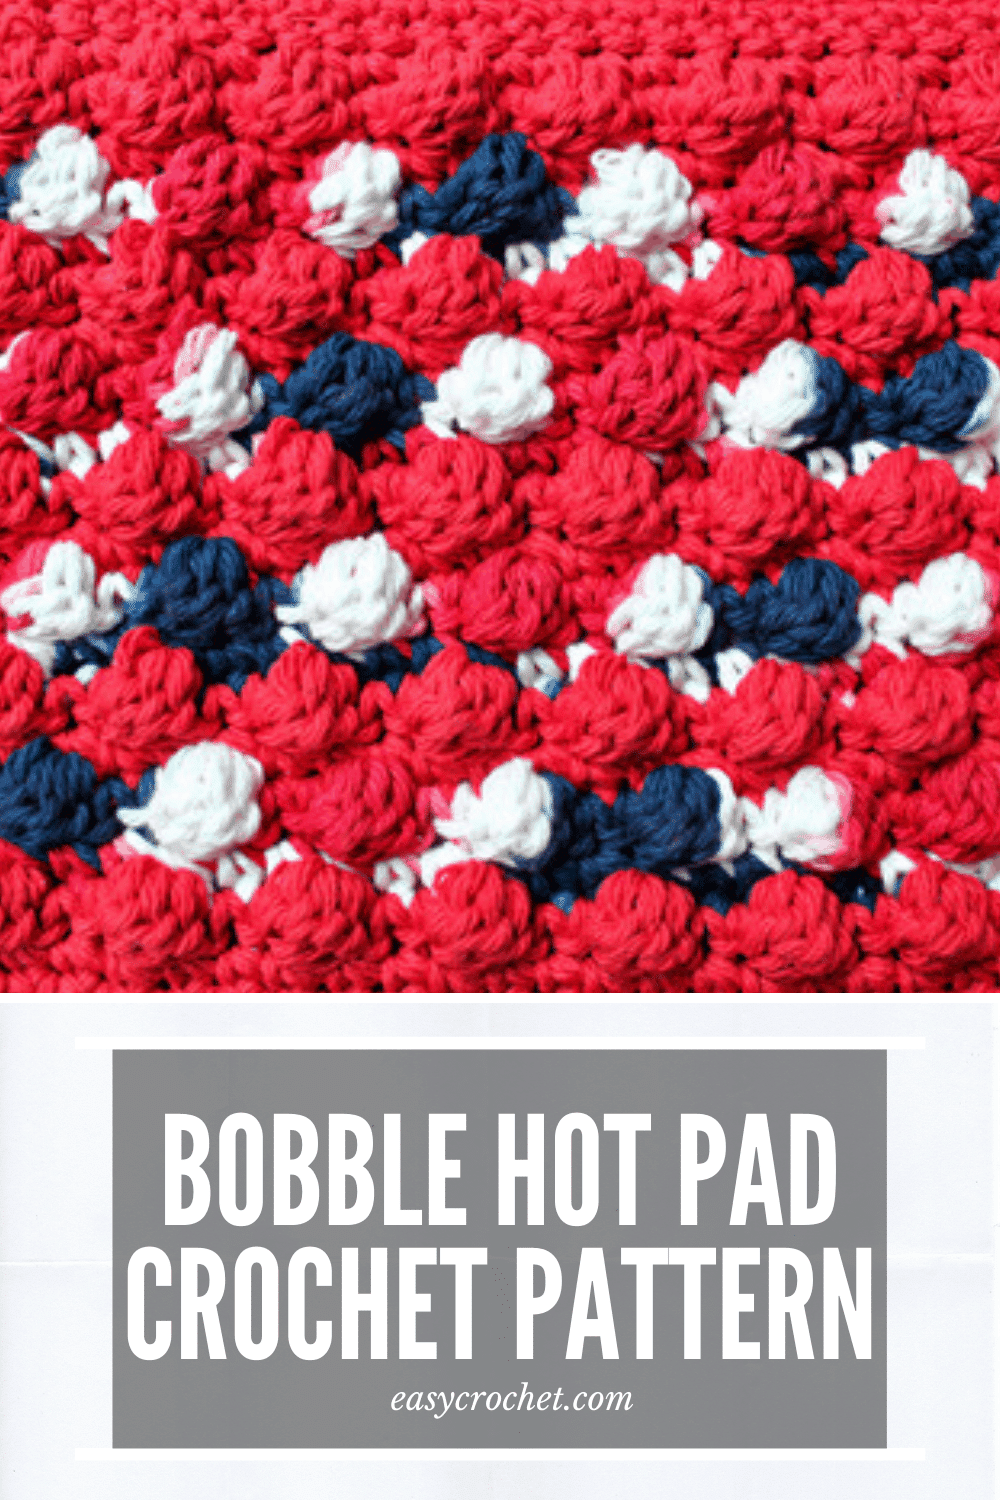 Bobble Crochet Hot Pad Pattern